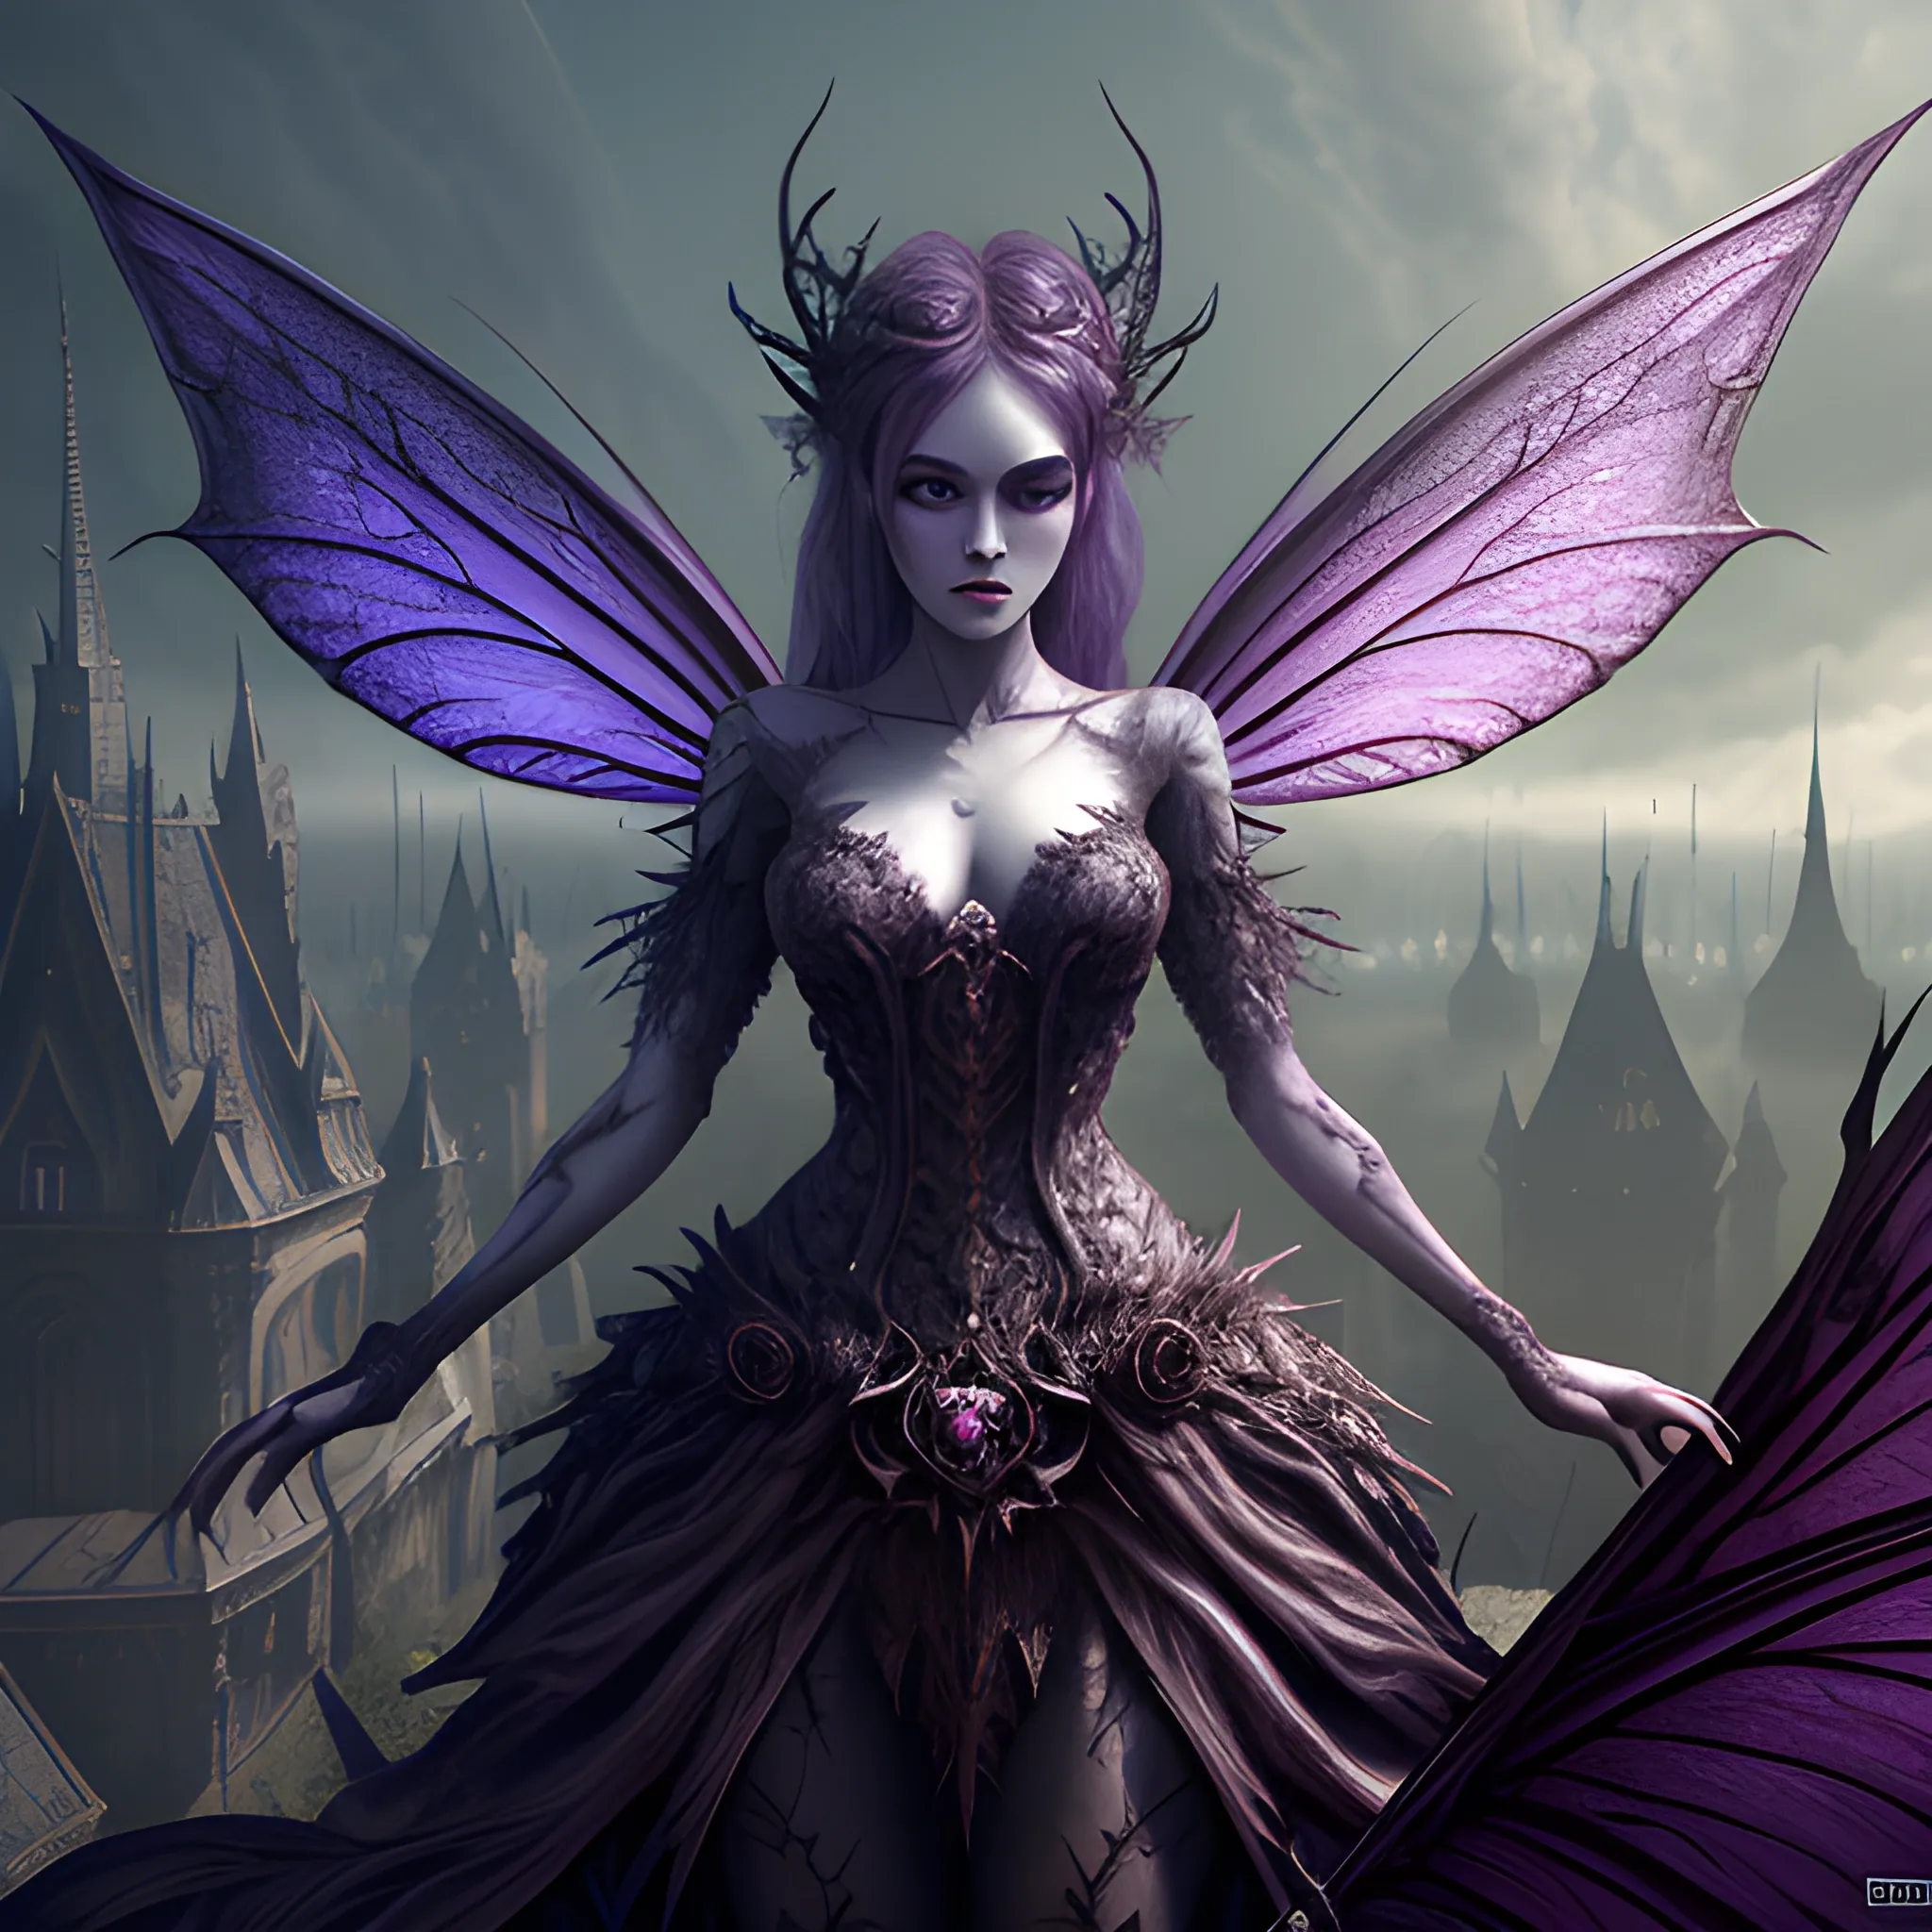 dark evil fairies